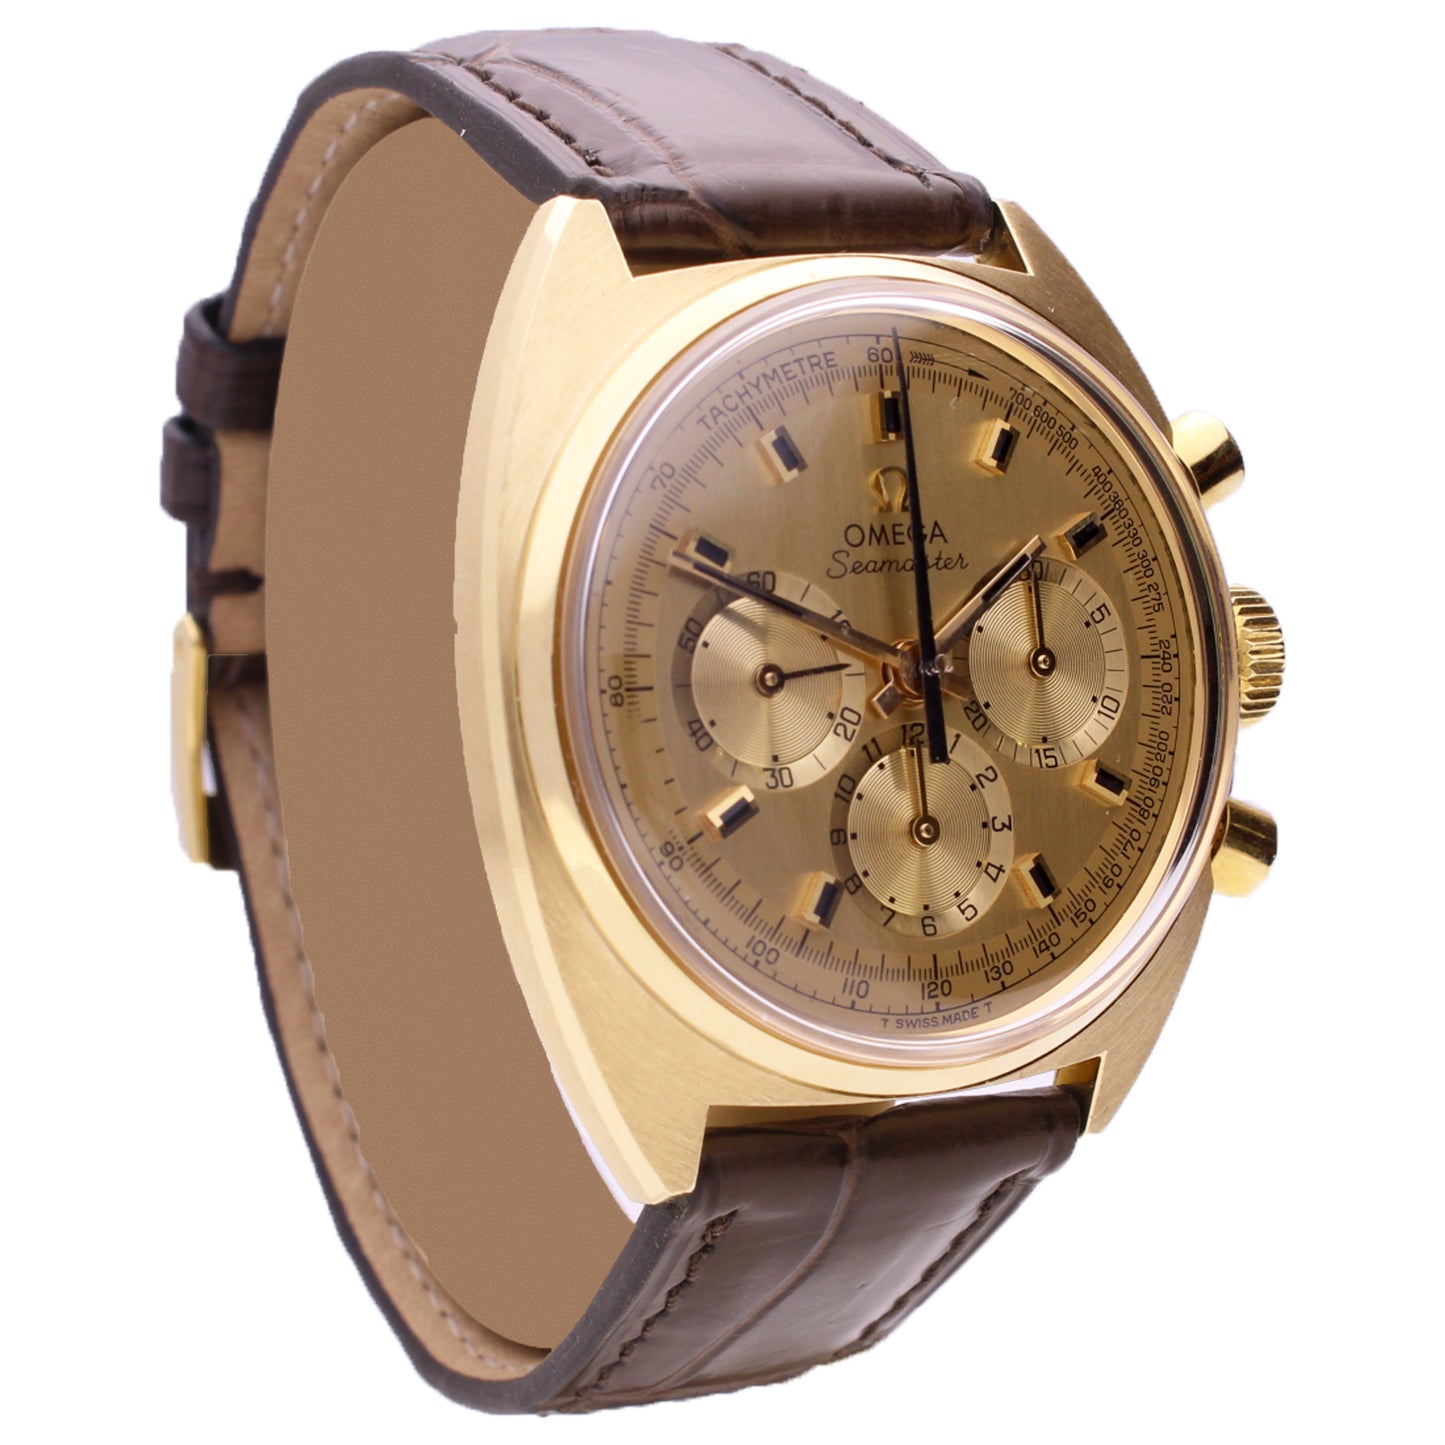 18ct yellow gold OMEGA Seamaster chronograph wristwatch. Made 1969